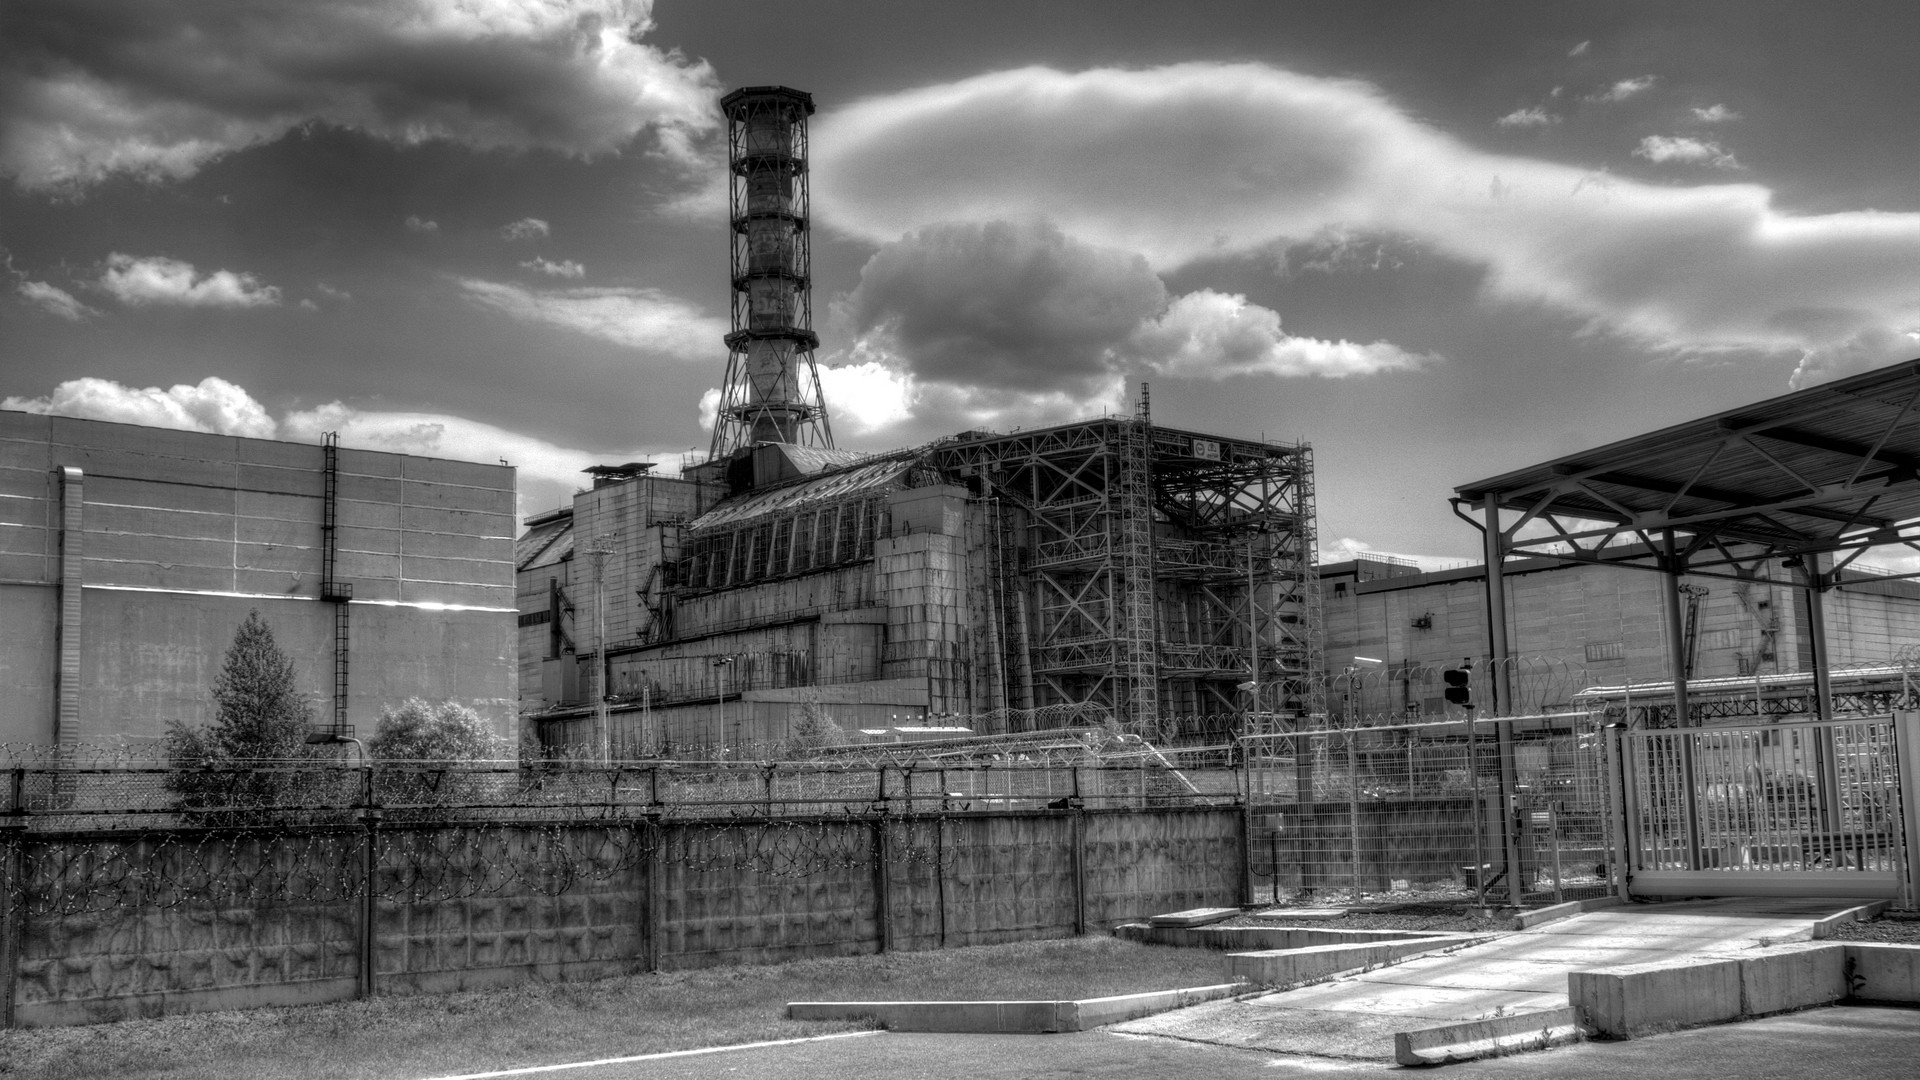 Hd Factory Wallpaper - Chernobyl Nuclear Power Plant, Reactor #4 - HD Wallpaper 